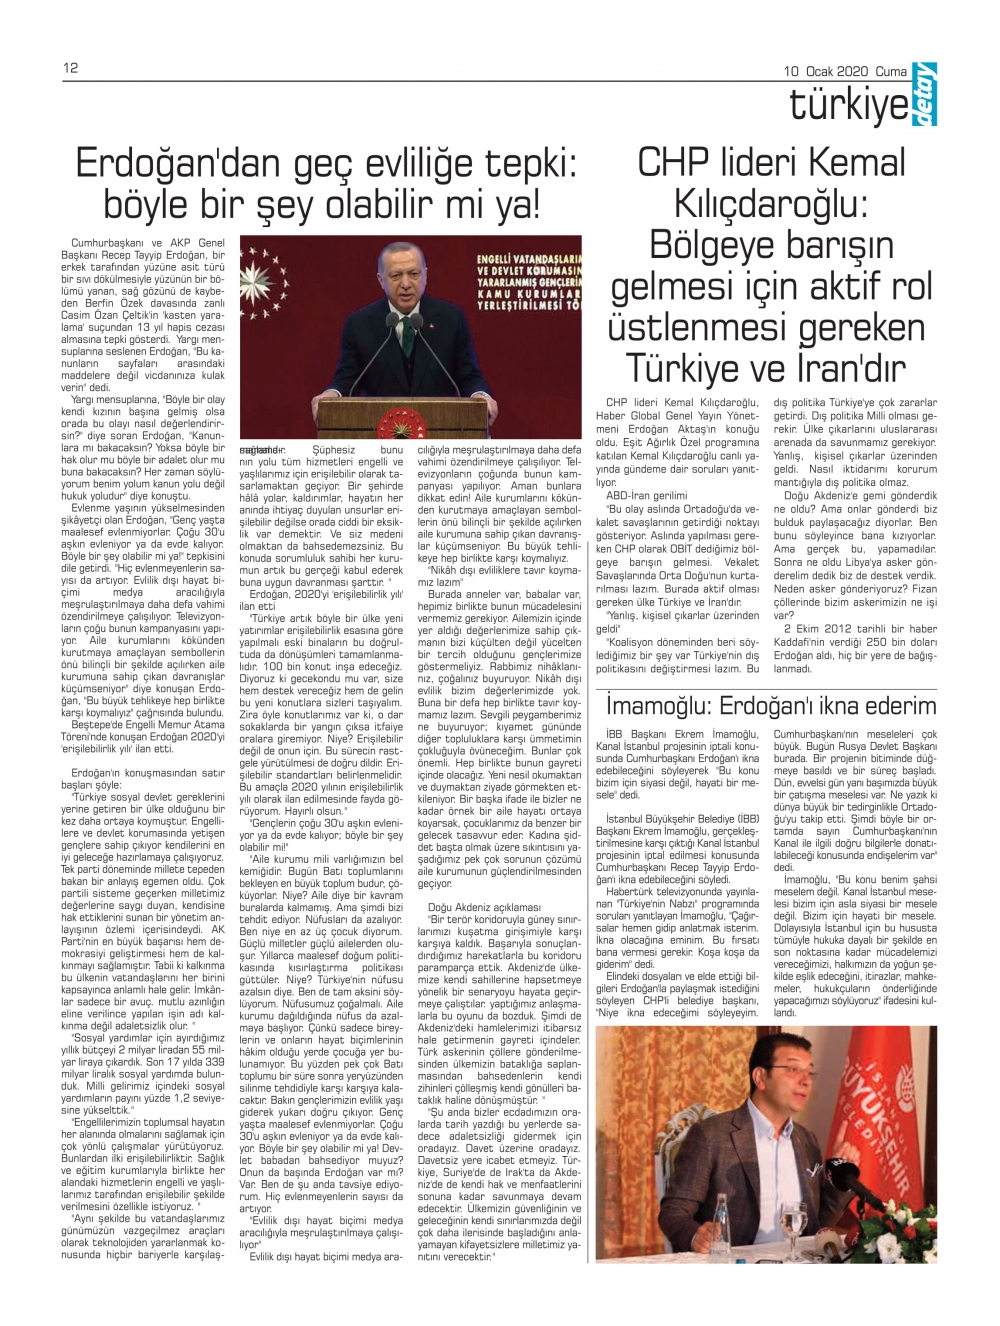 Detay Gazetes 10 Ocak 2020 galerisi resim 11